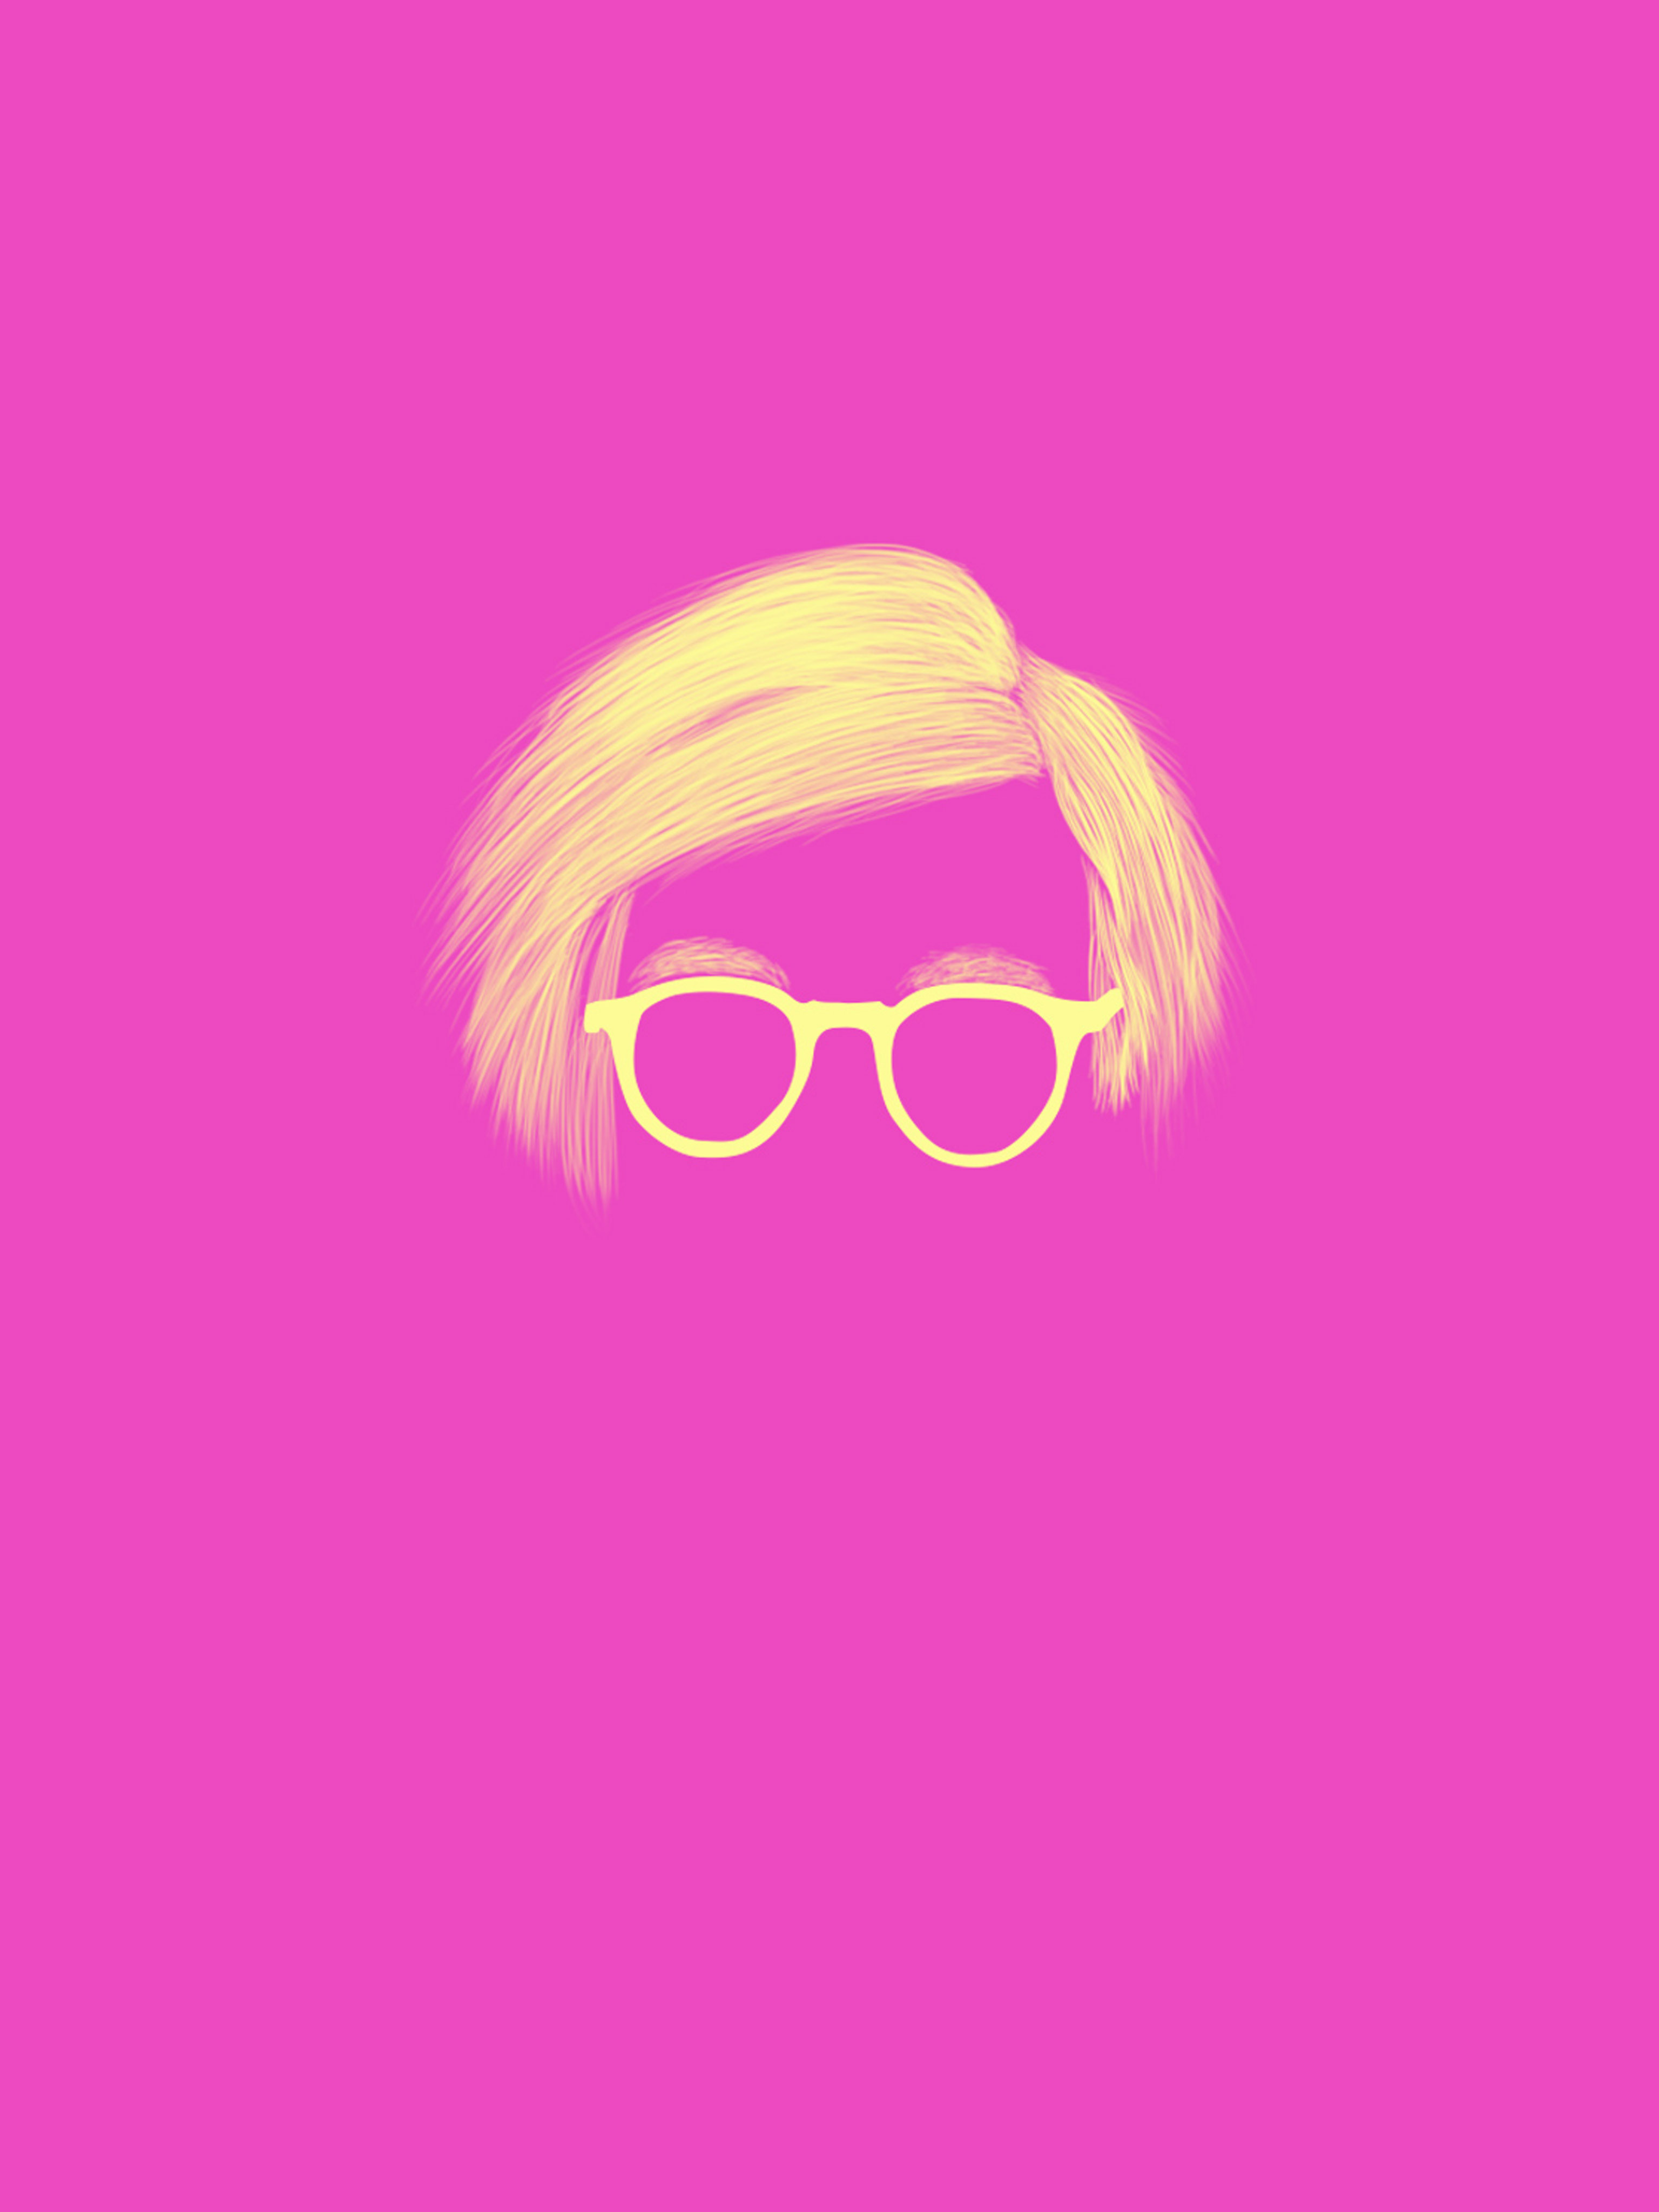 Andy Warhol Mobile Wallpaper | Miniwallist